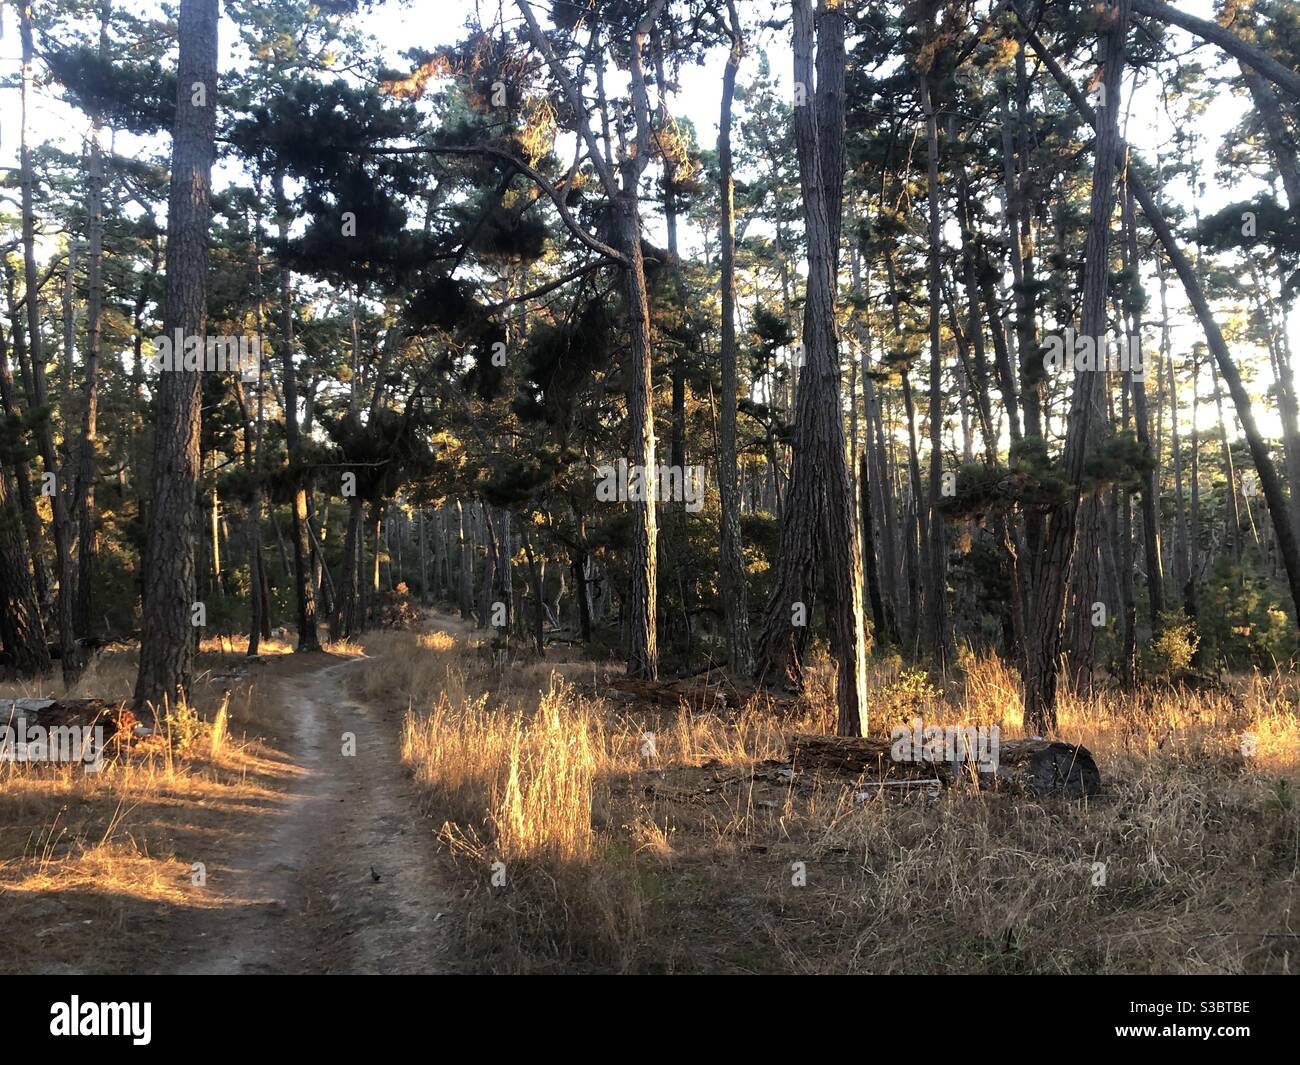 Dirt trail through a coastal pine forest Stock Photo